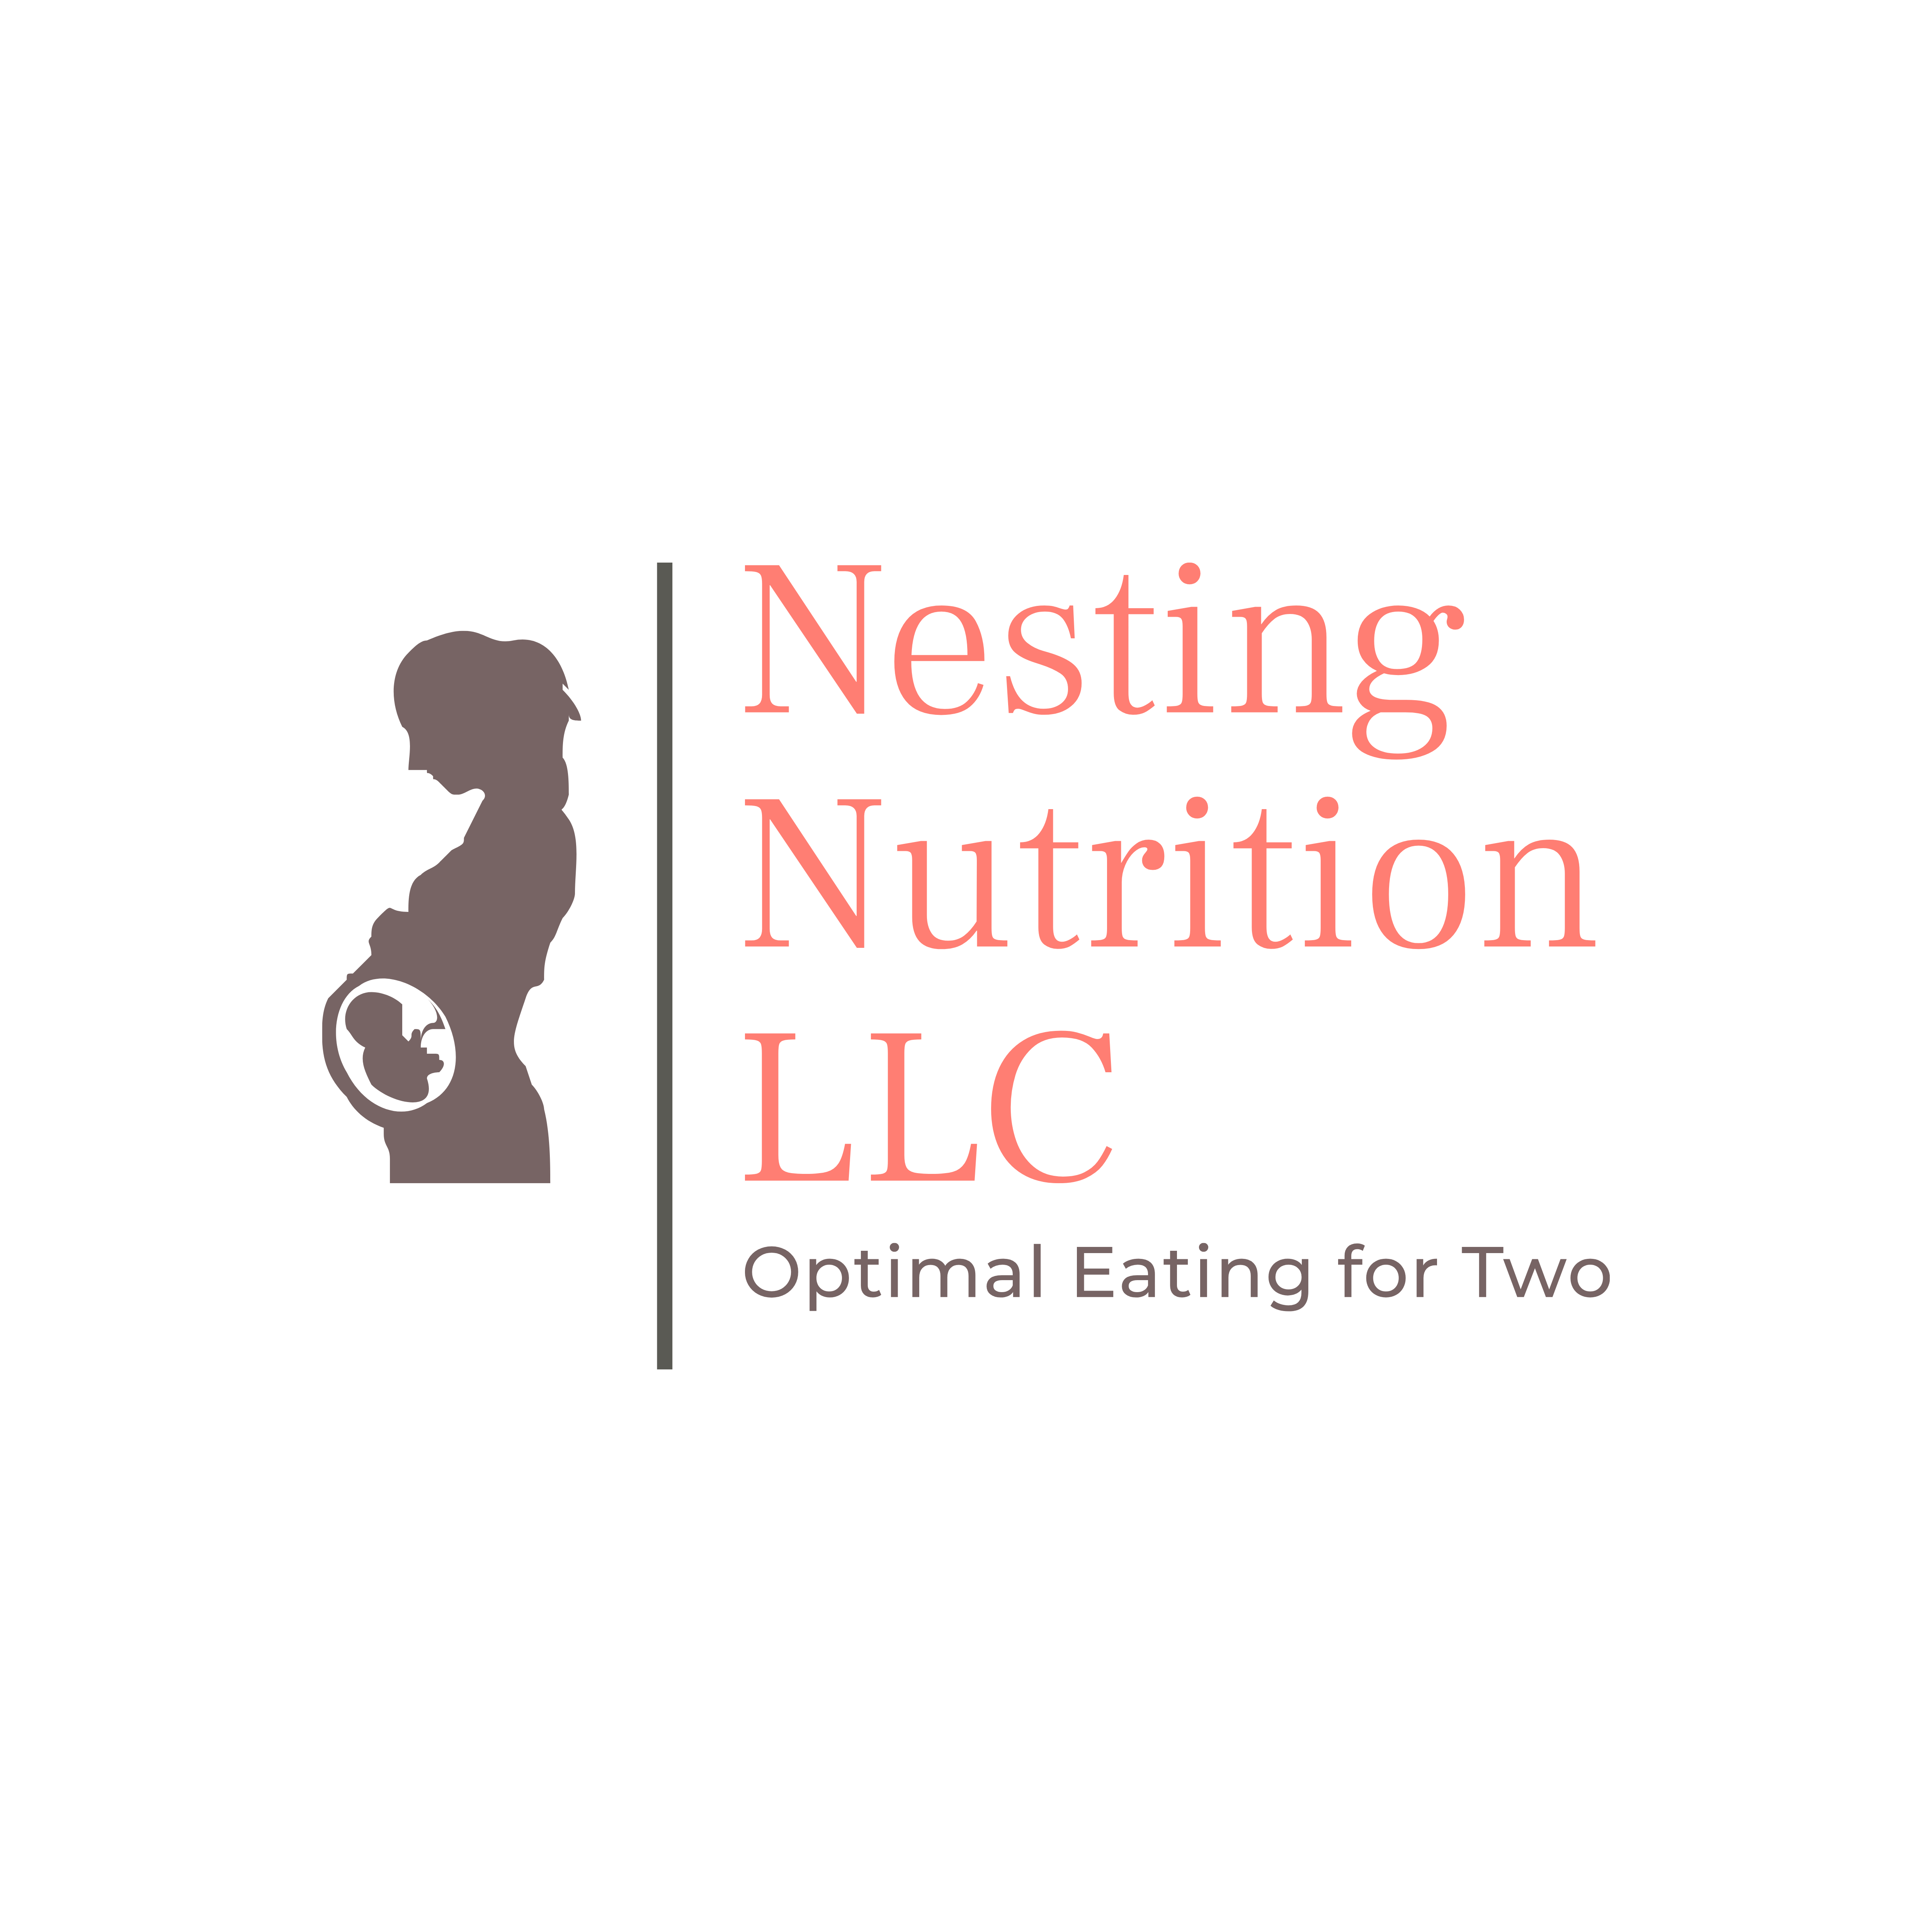 Nesting Nutrition LLC Amanda Dotts nestingnutritionllc.com